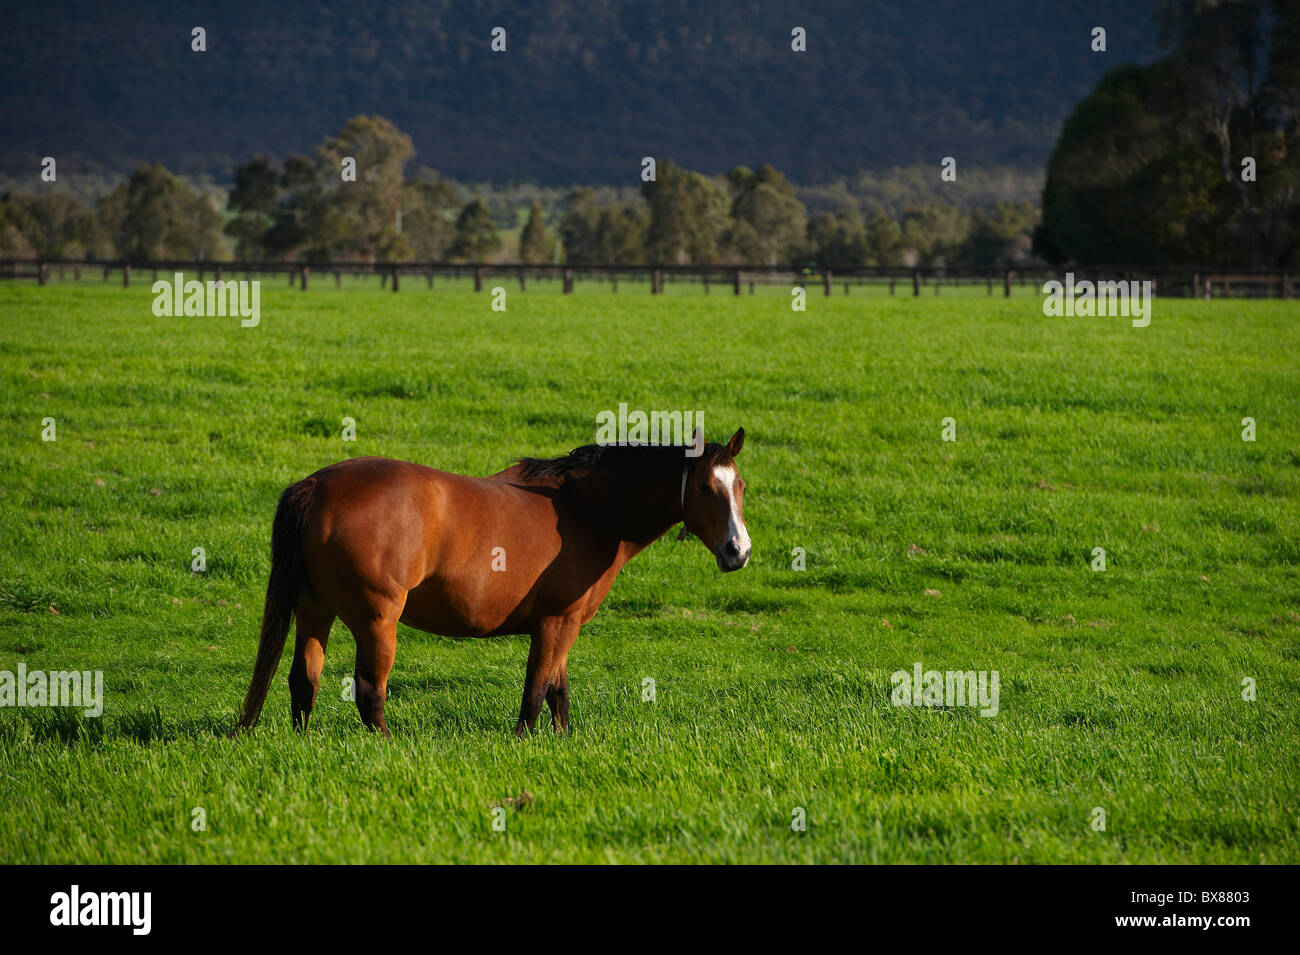 Horses grazing in lush pastures Stock Photo